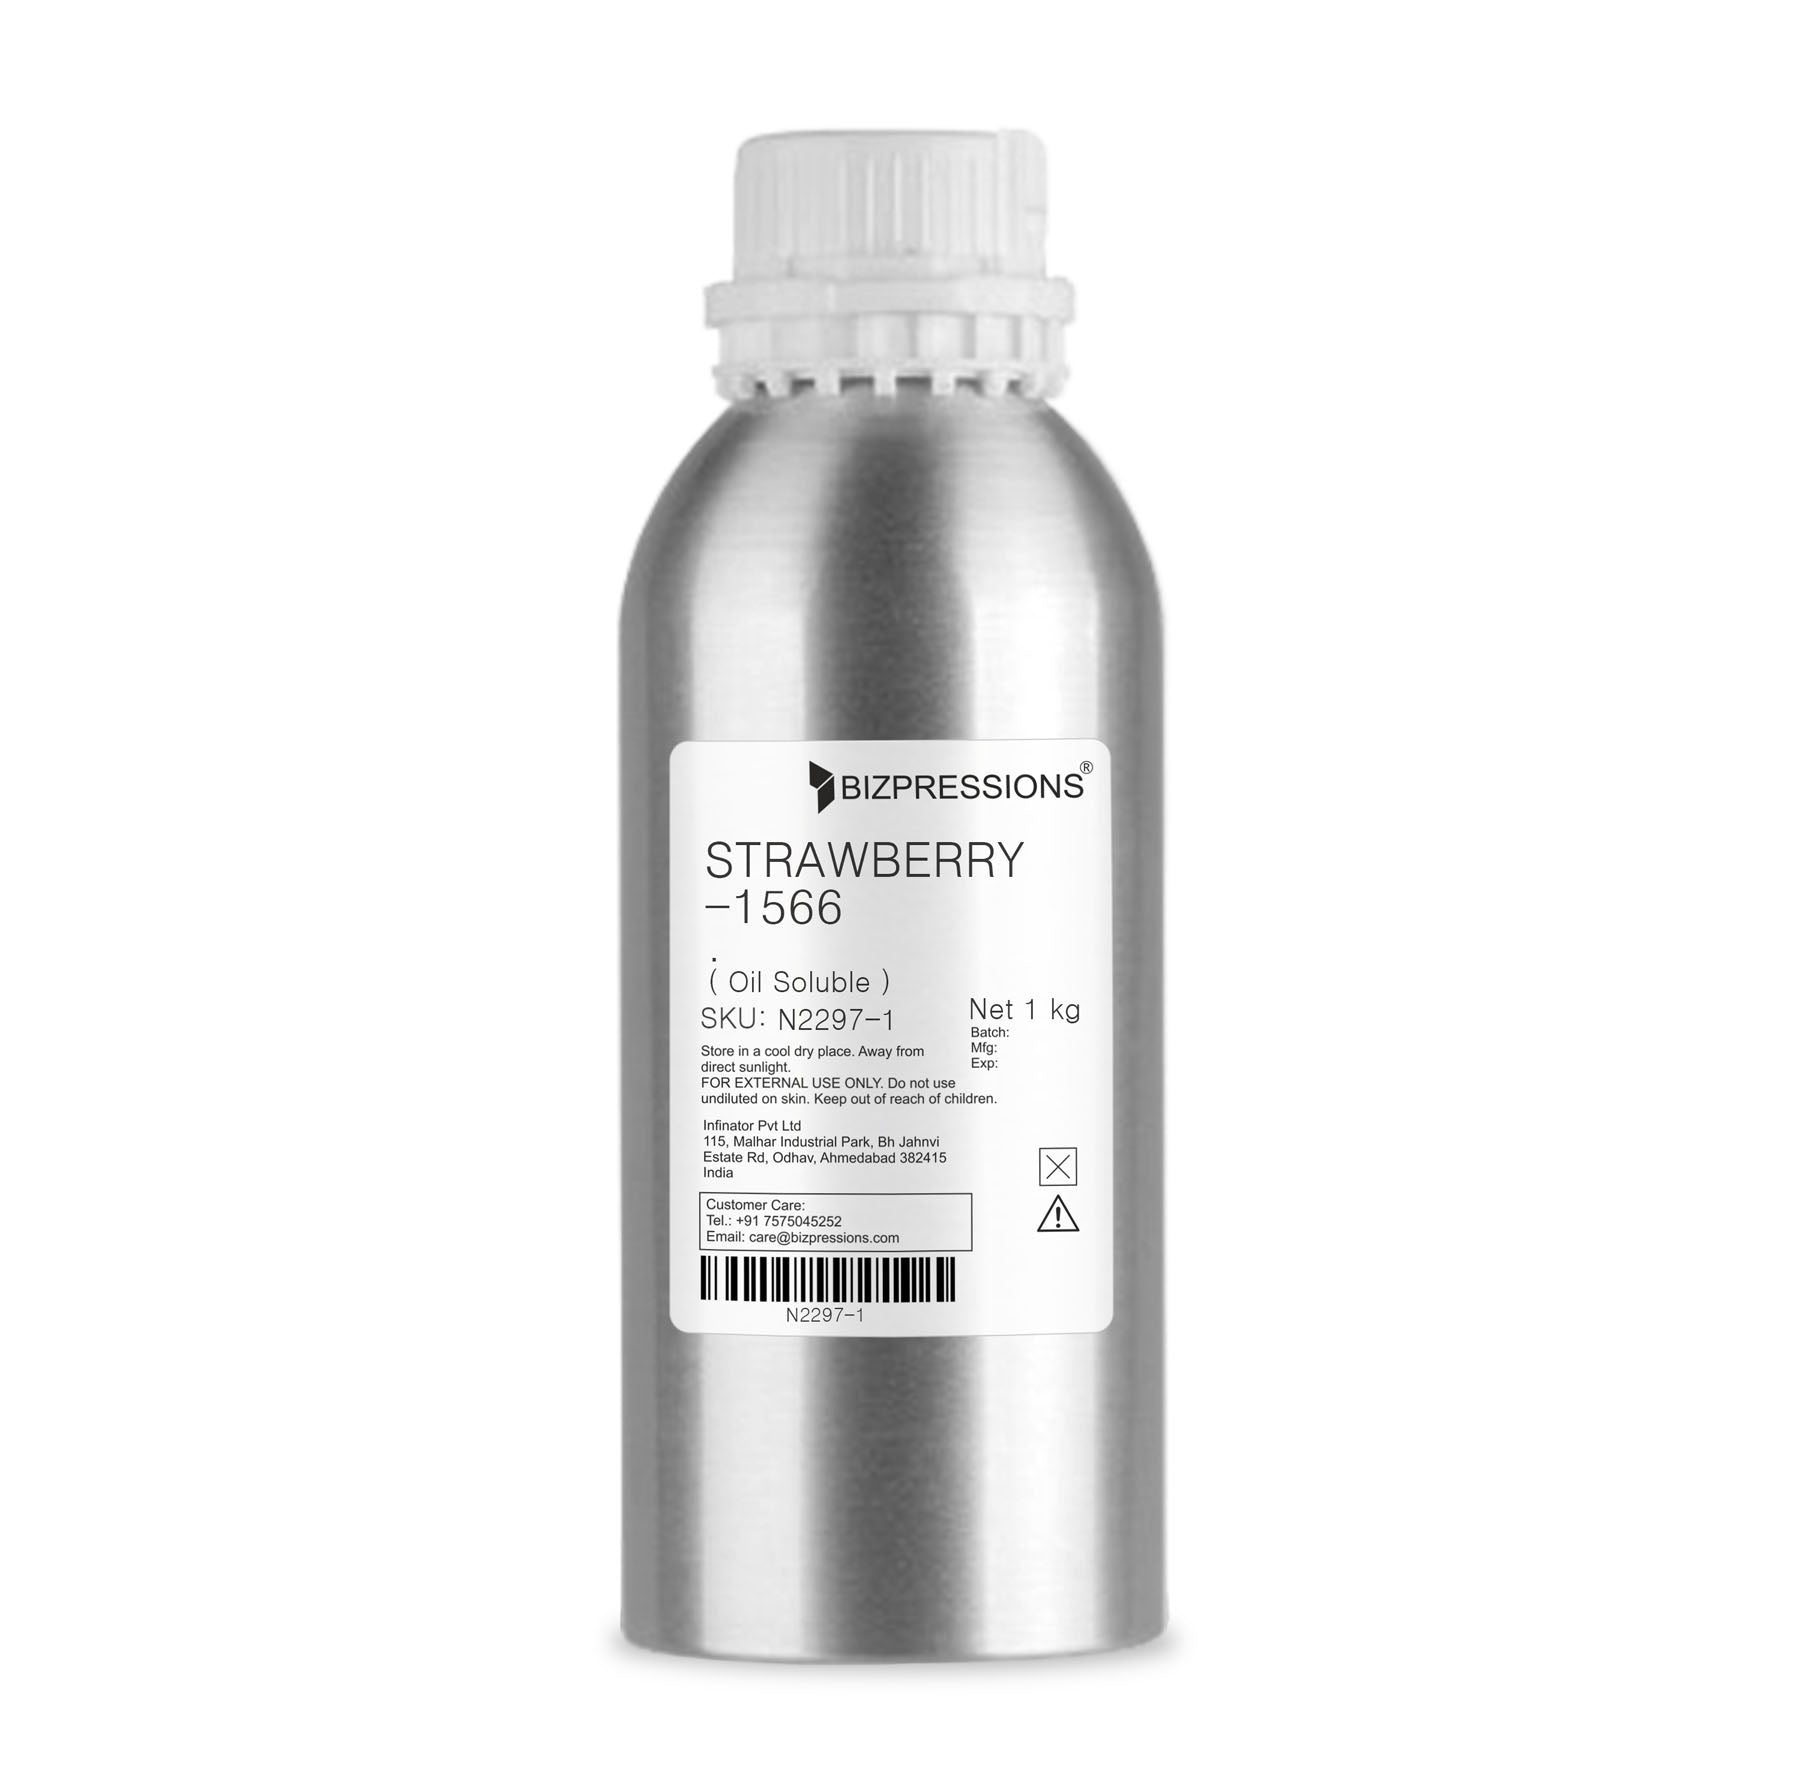 STRAWBERRY - 1566 - Fragrance ( Oil Soluble ) - 1 kg